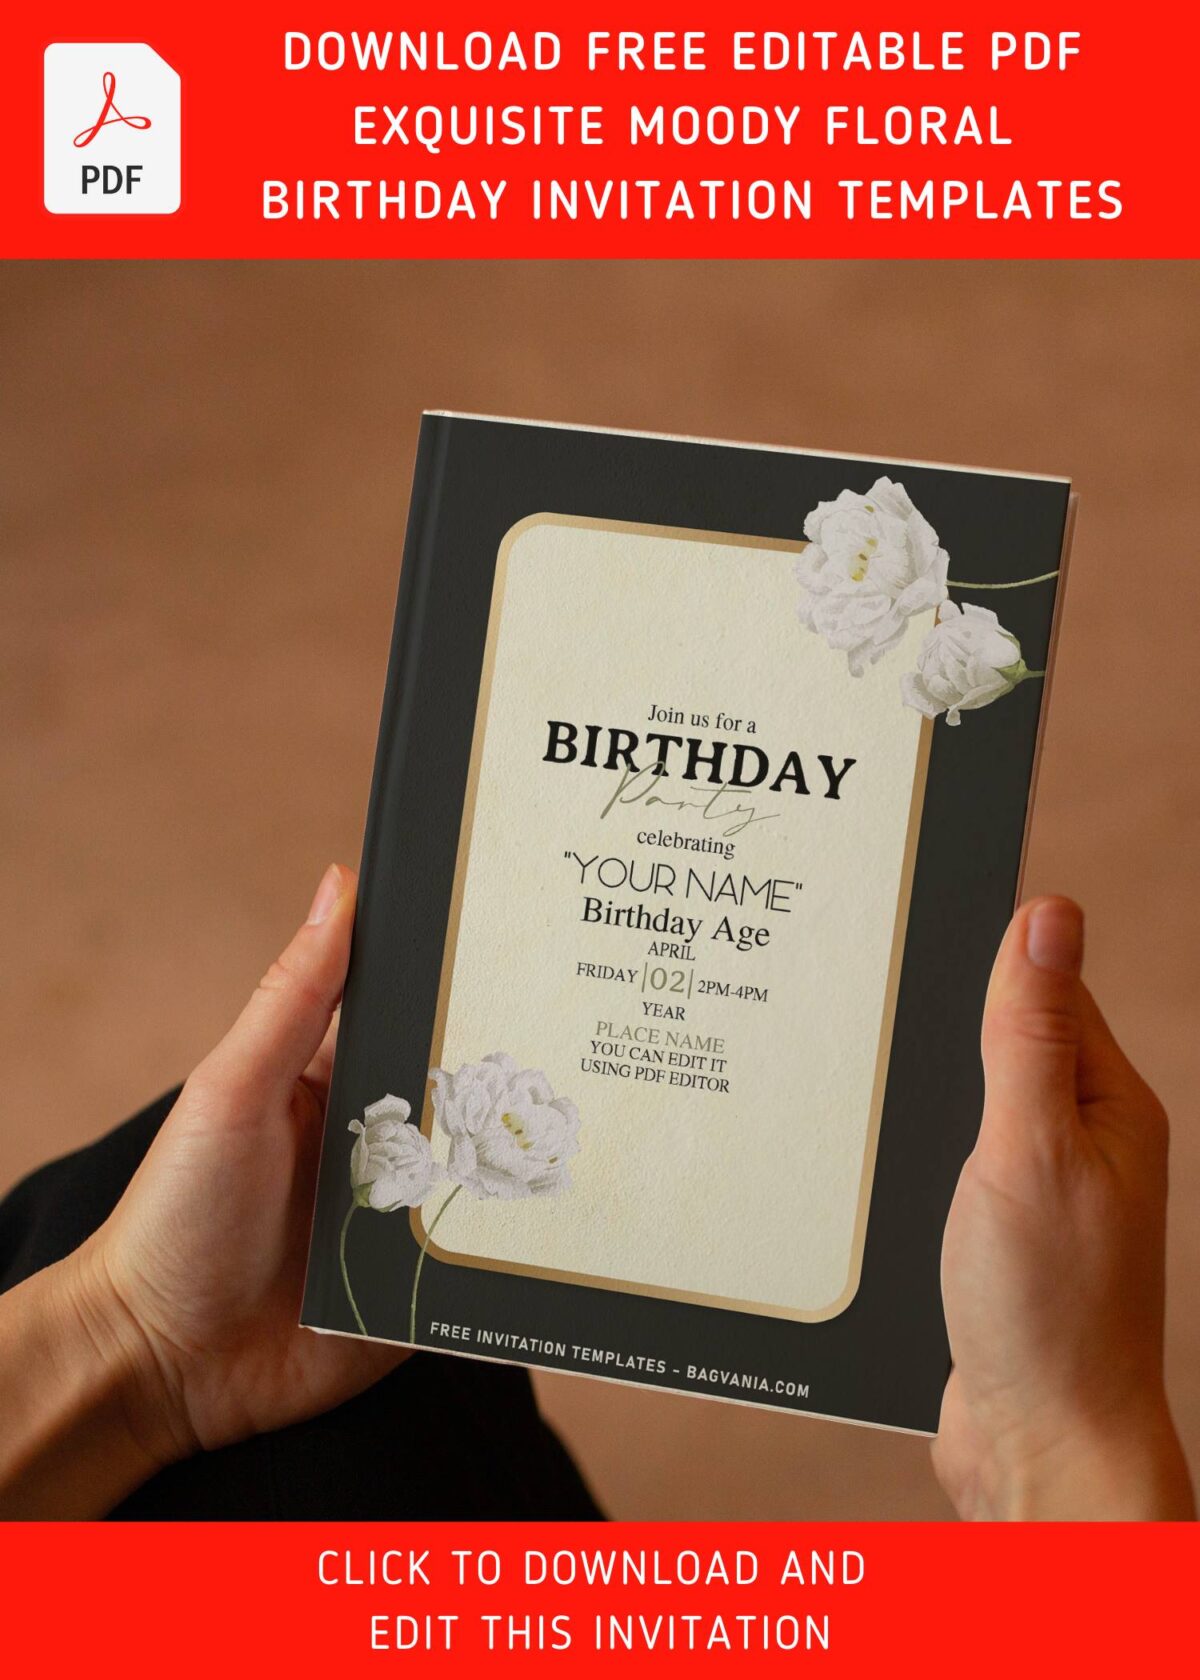 (Free Editable PDF) Stylish & Captivating Moody Floral Birthday Invitation Templates with editable text